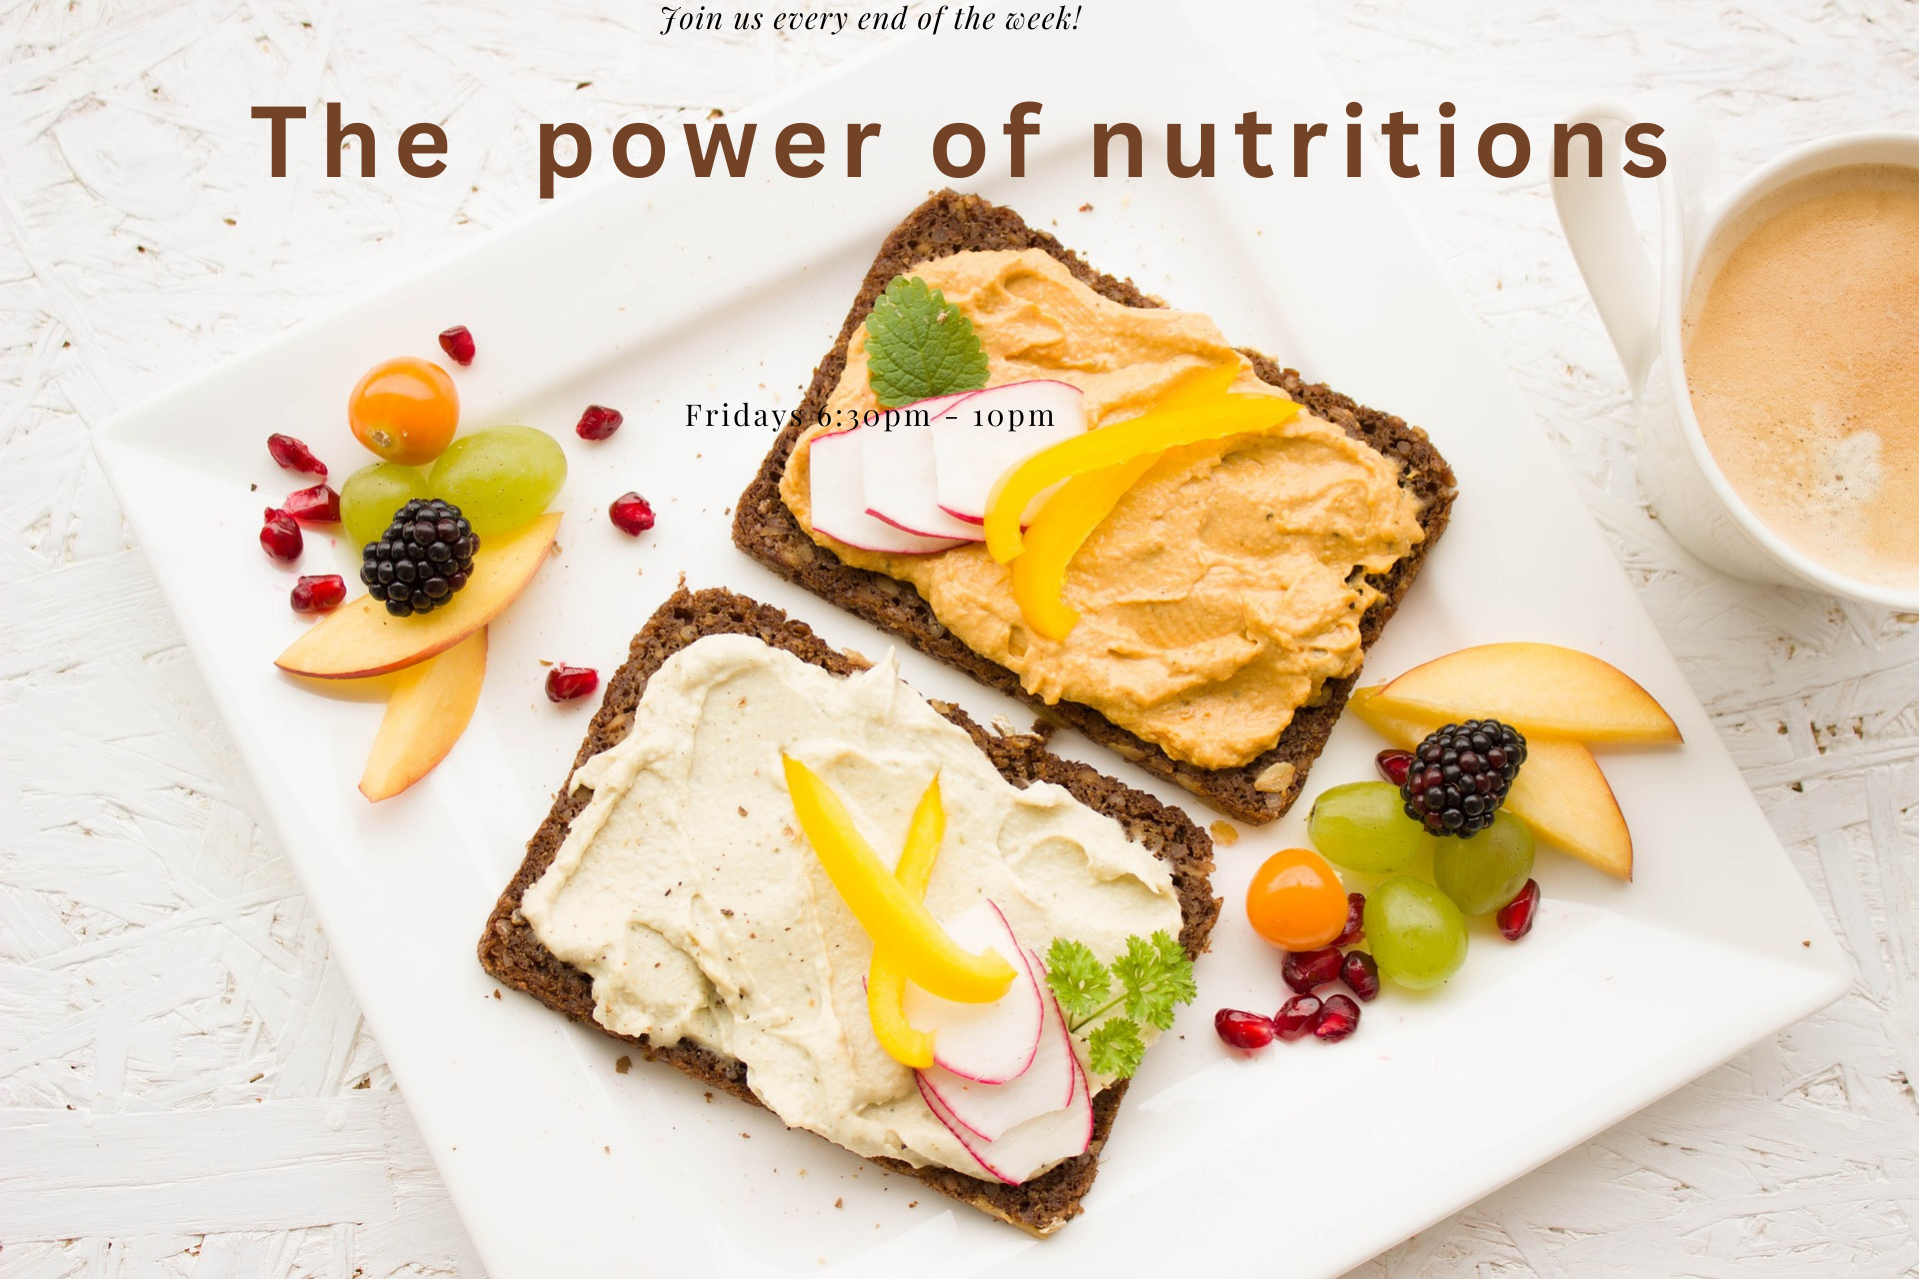 Power of nutrituon